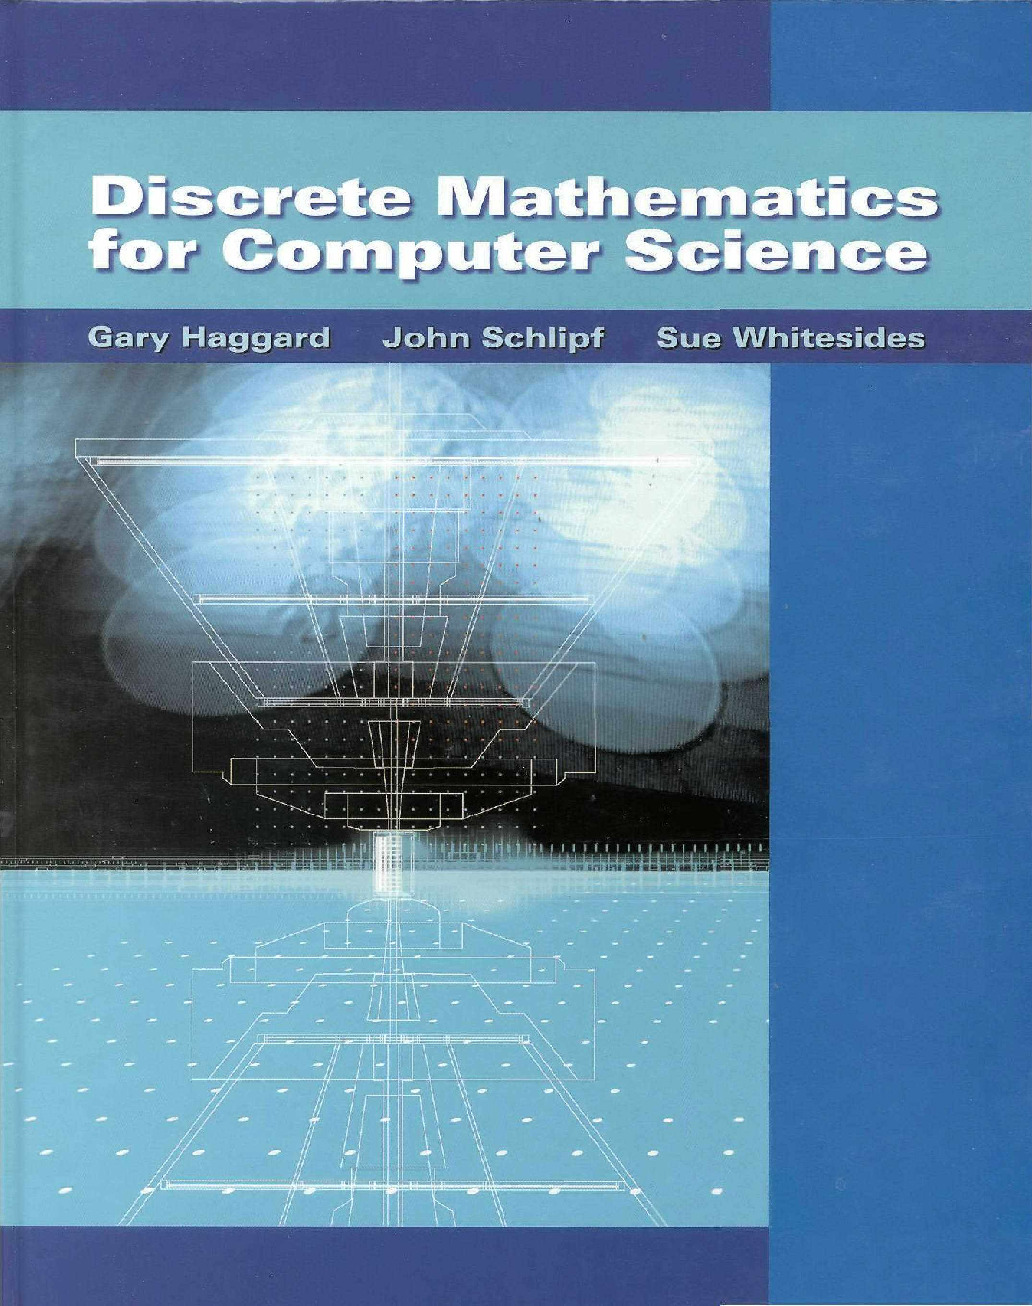 Discrete Mathematic for Computer Science